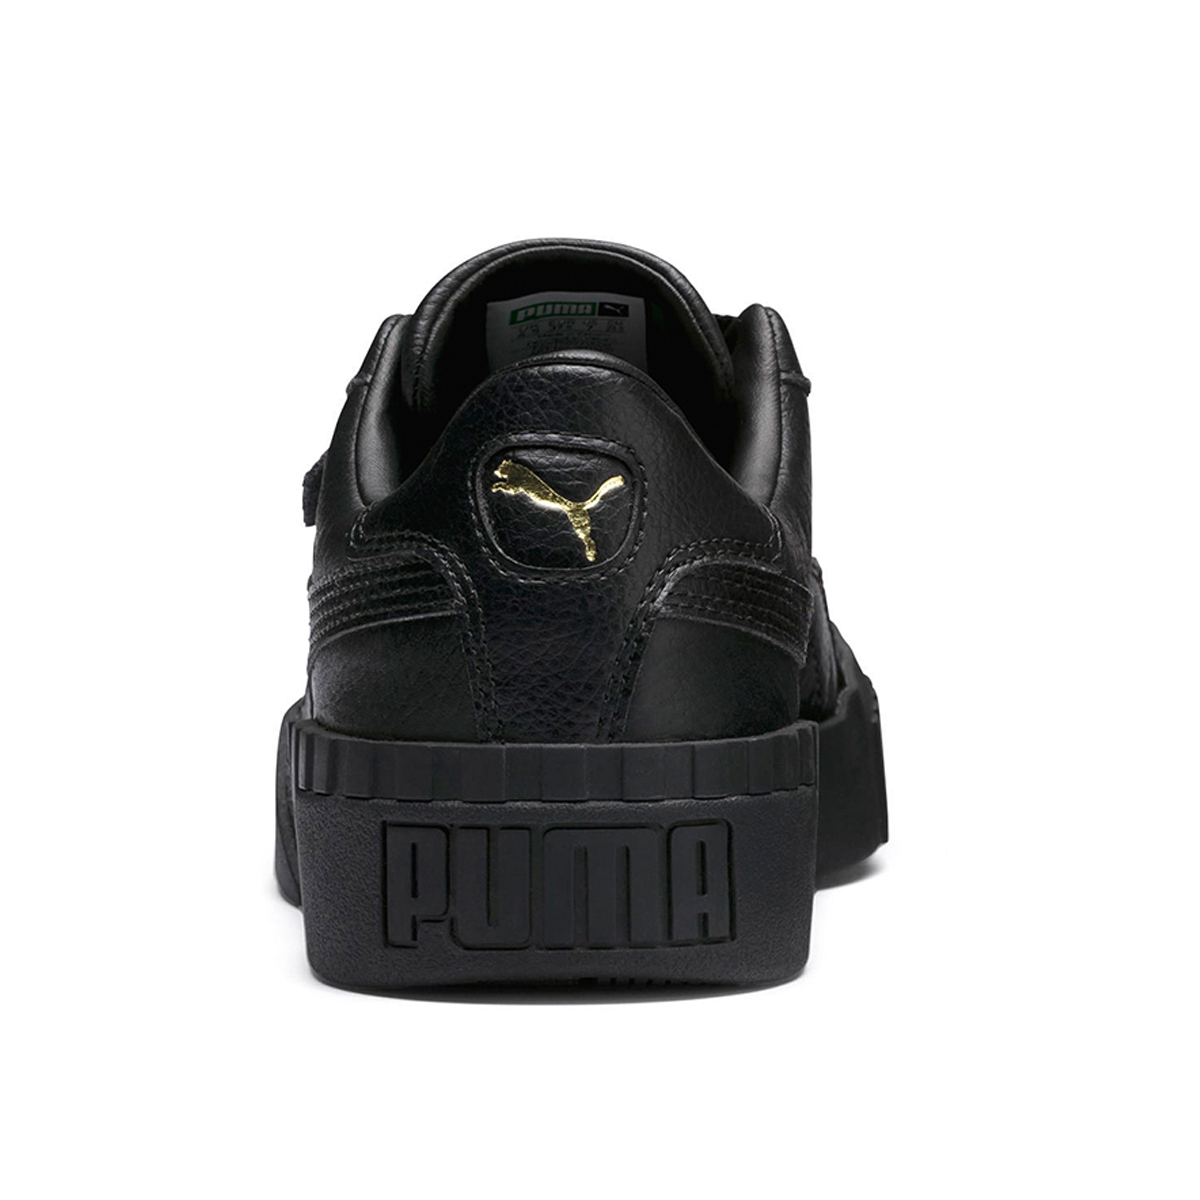 Puma Cali Wns Damen Sneaker schwarz 369155 05